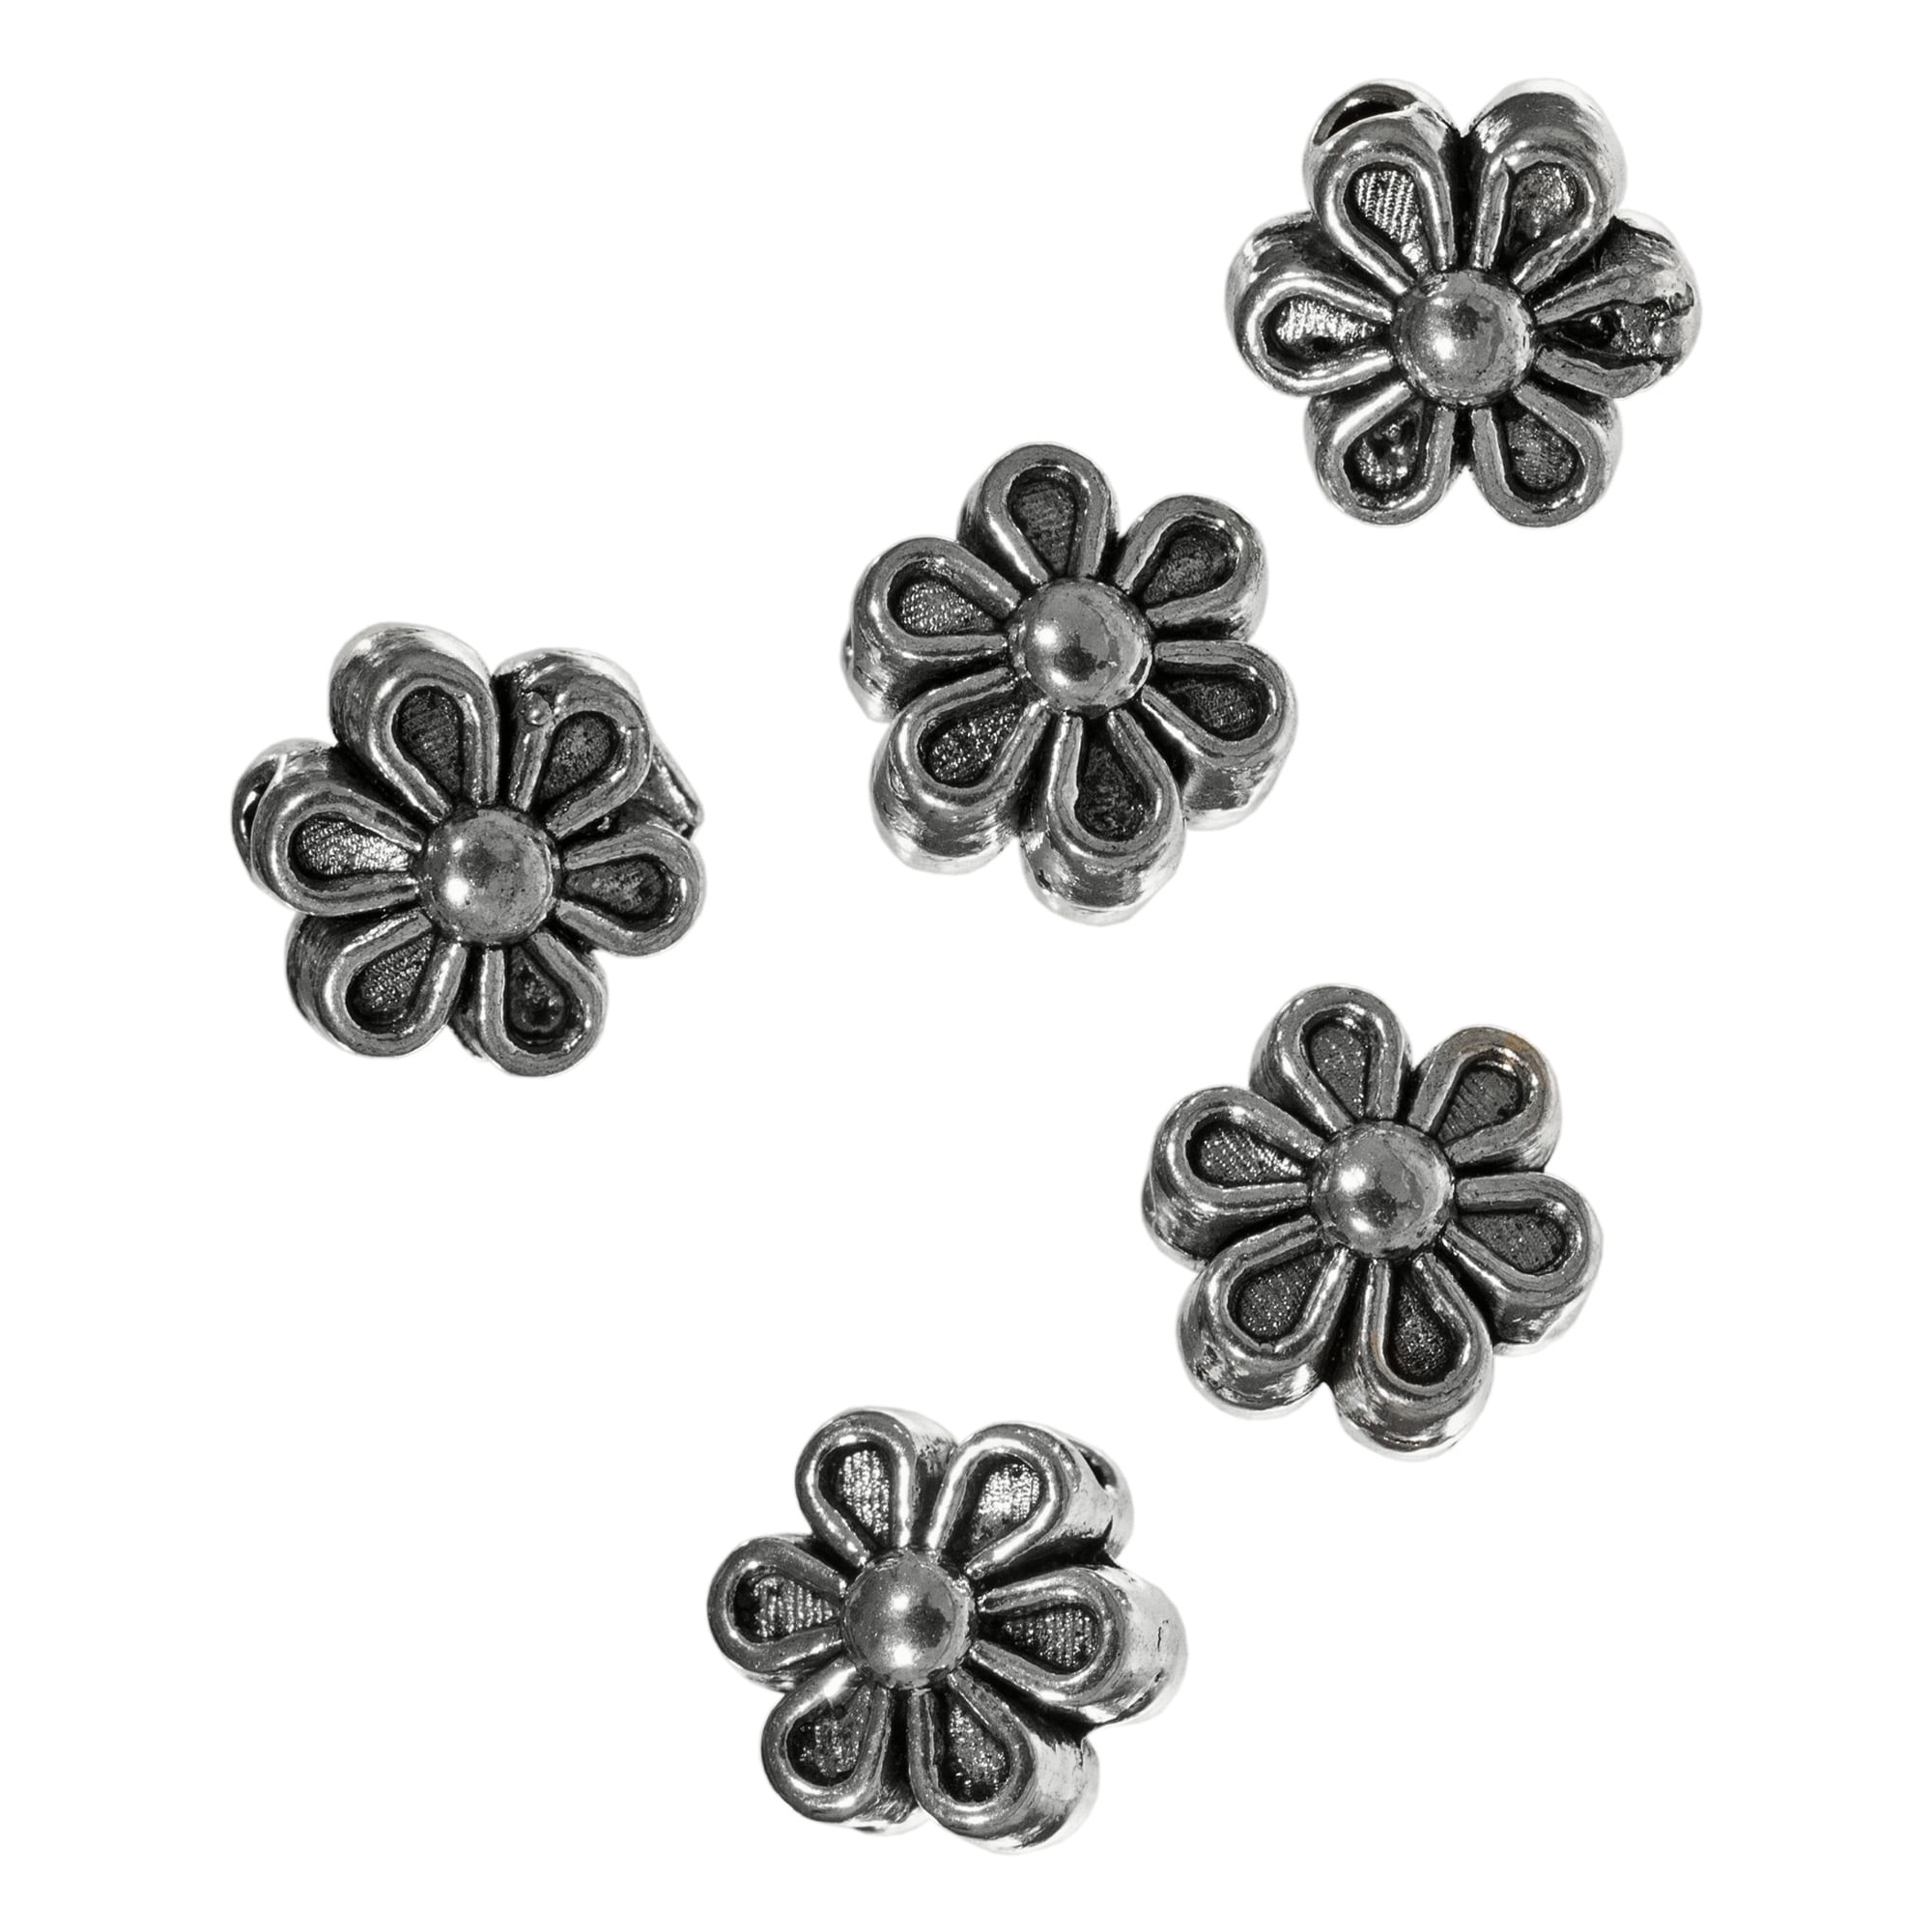 8 Flower Beads Spacer Beads Metal Antiqued Bronze 7mm Findings 